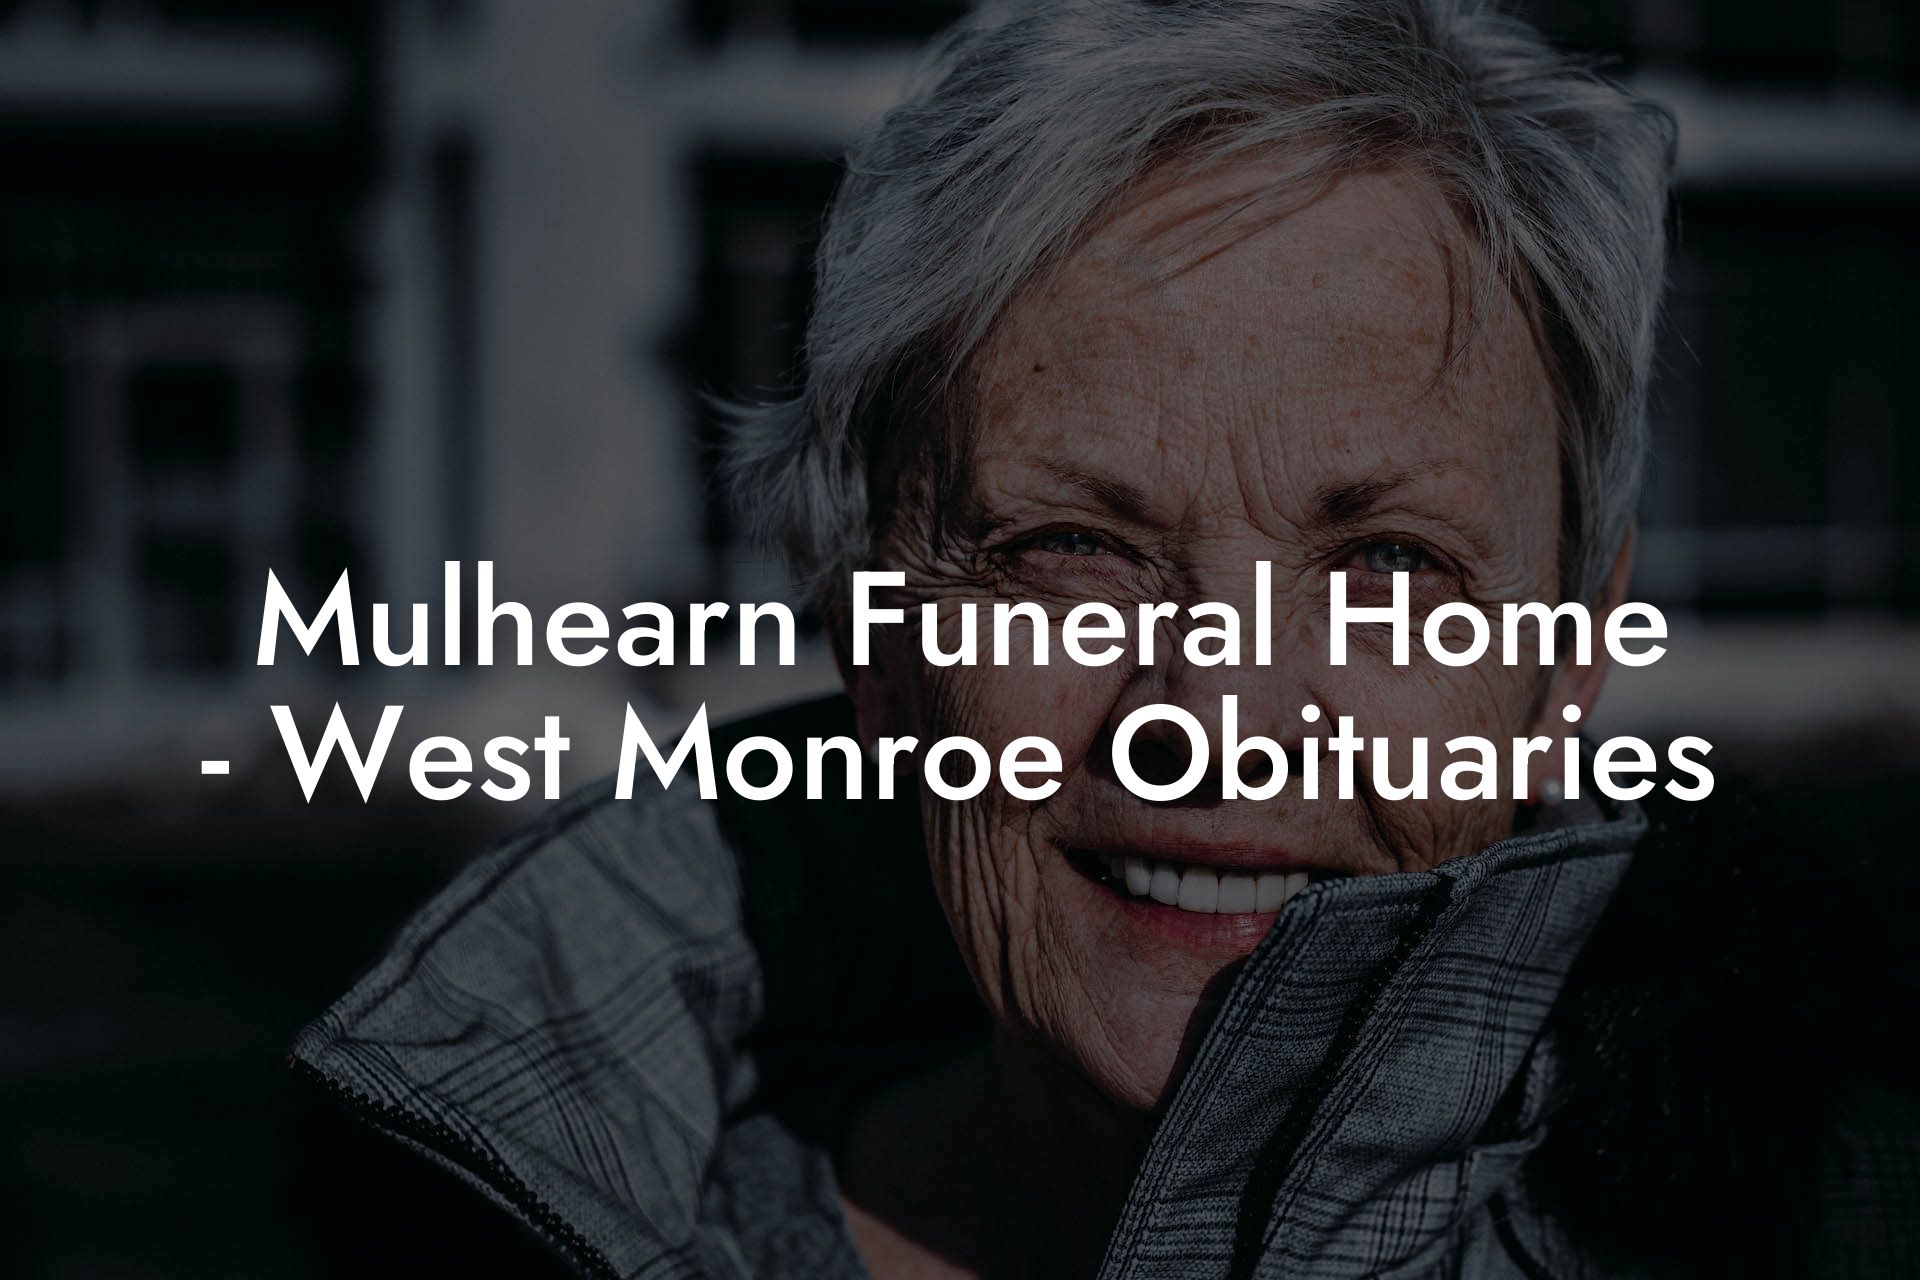 Mulhearn Funeral Home - West Monroe Obituaries